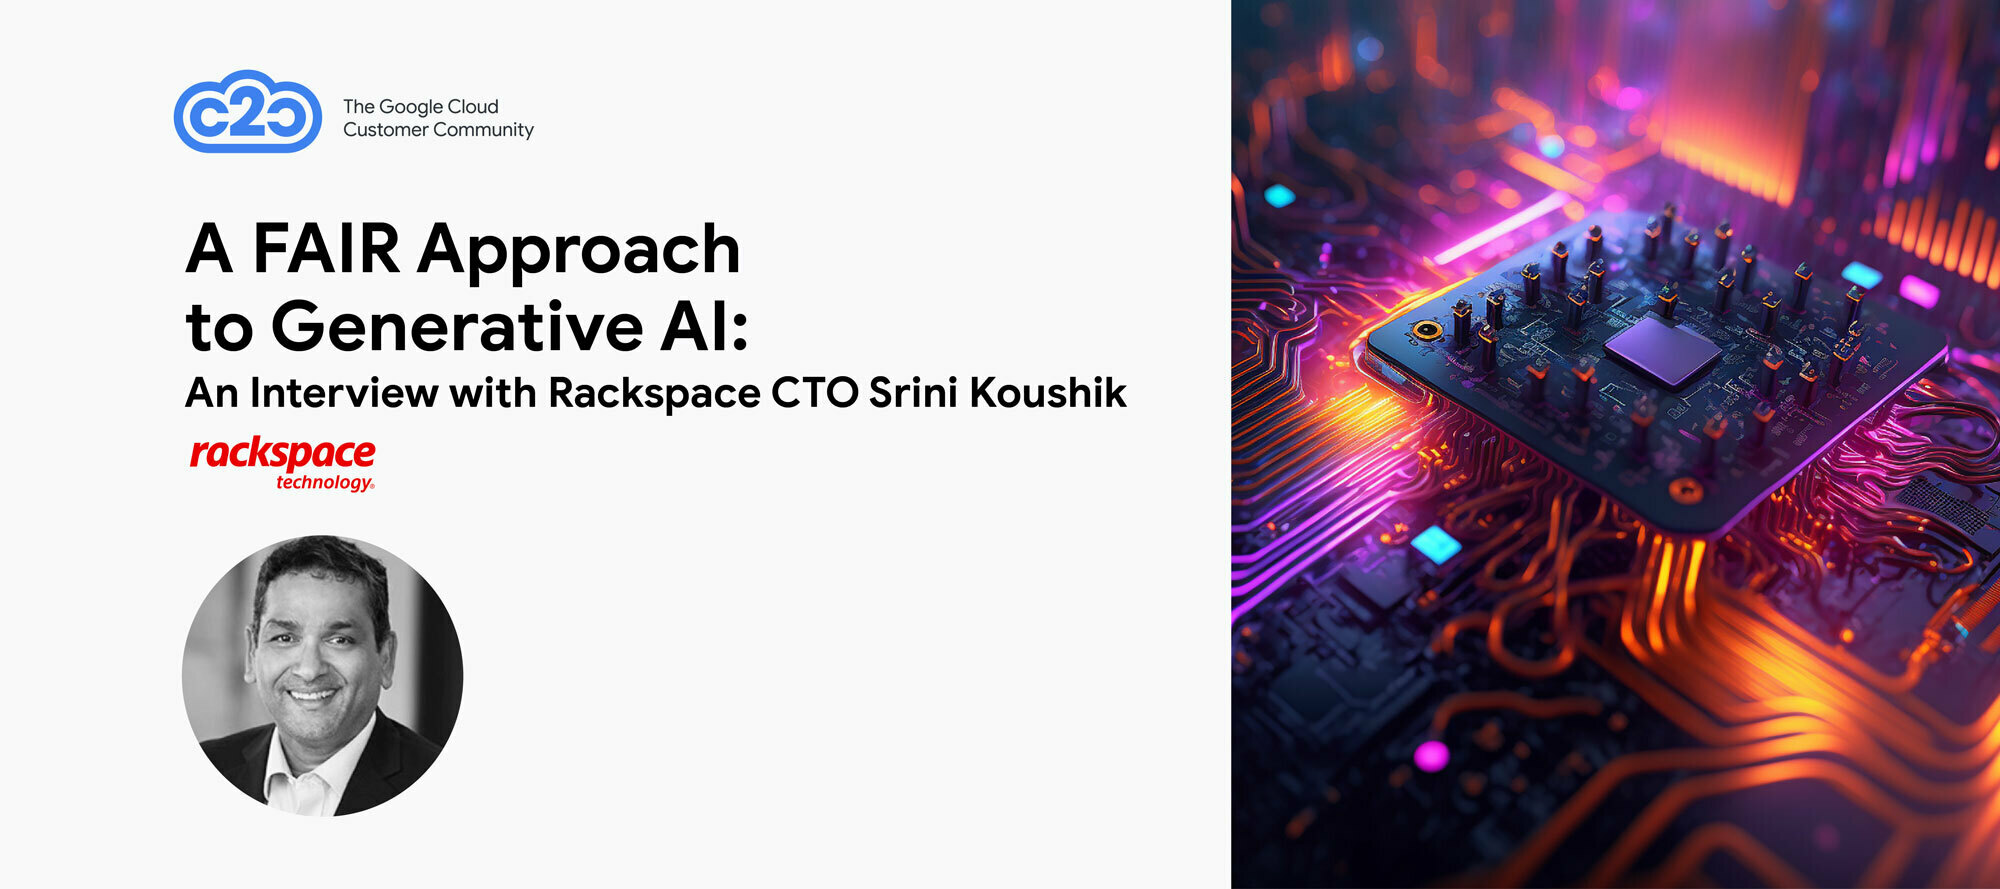 A FAIR Approach to Generative AI: An Interview with Rackspace CTO Srini Koushik